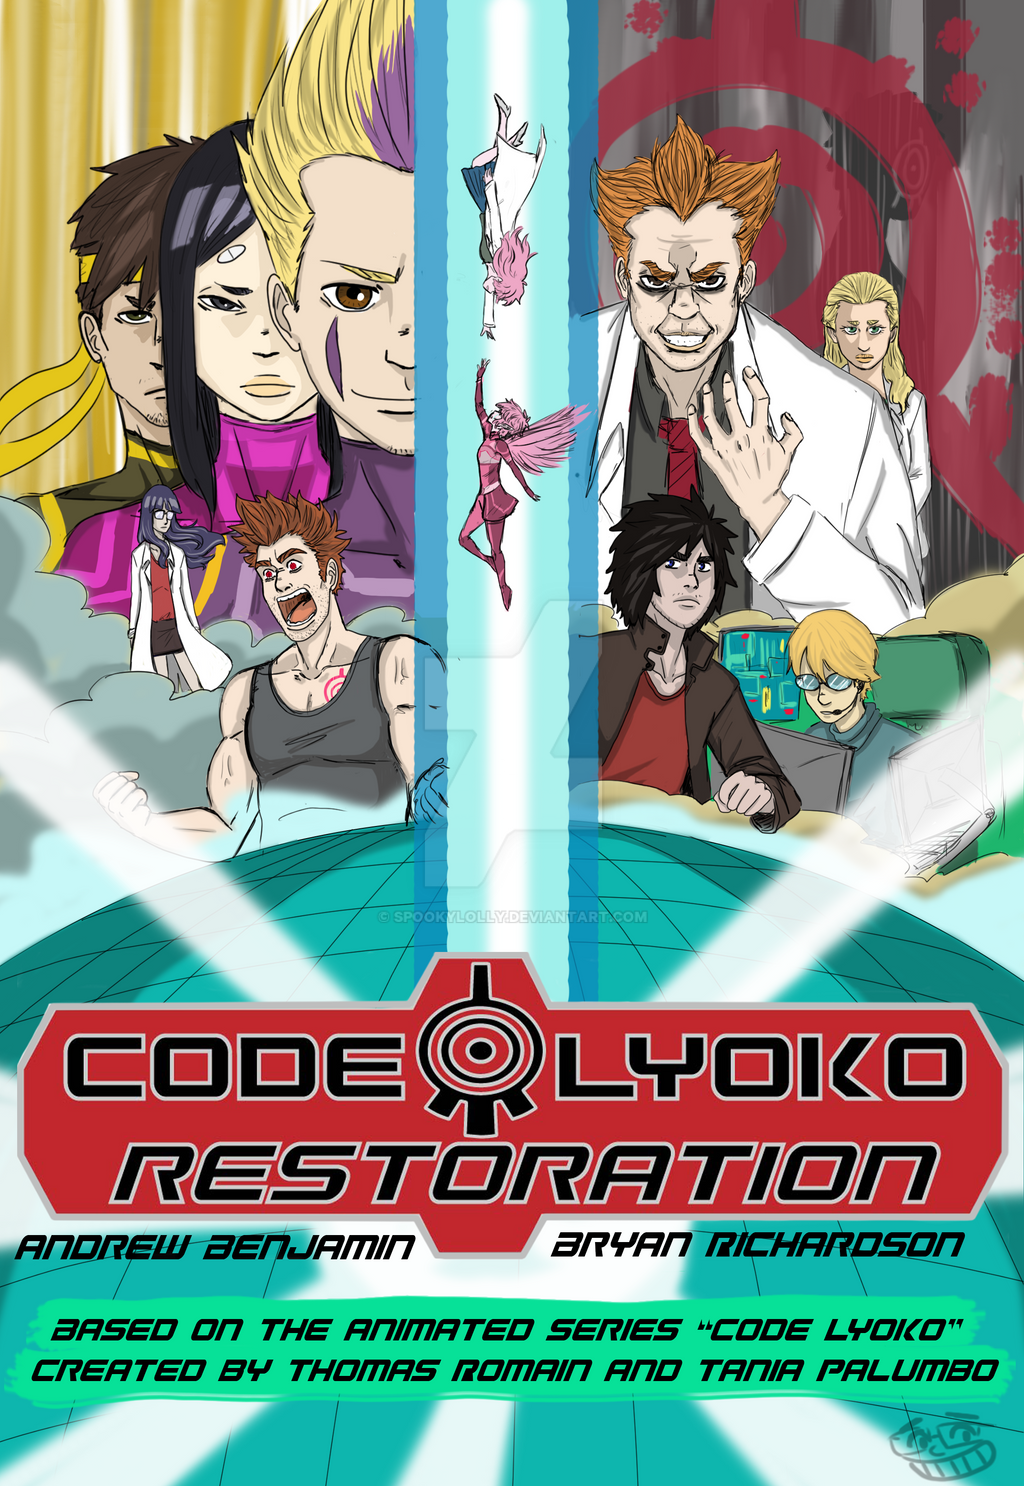 Code Lyoko Restoration Promotional Art By Spookylolly On Deviantart - roblox music code lyoko evolution preview music 2